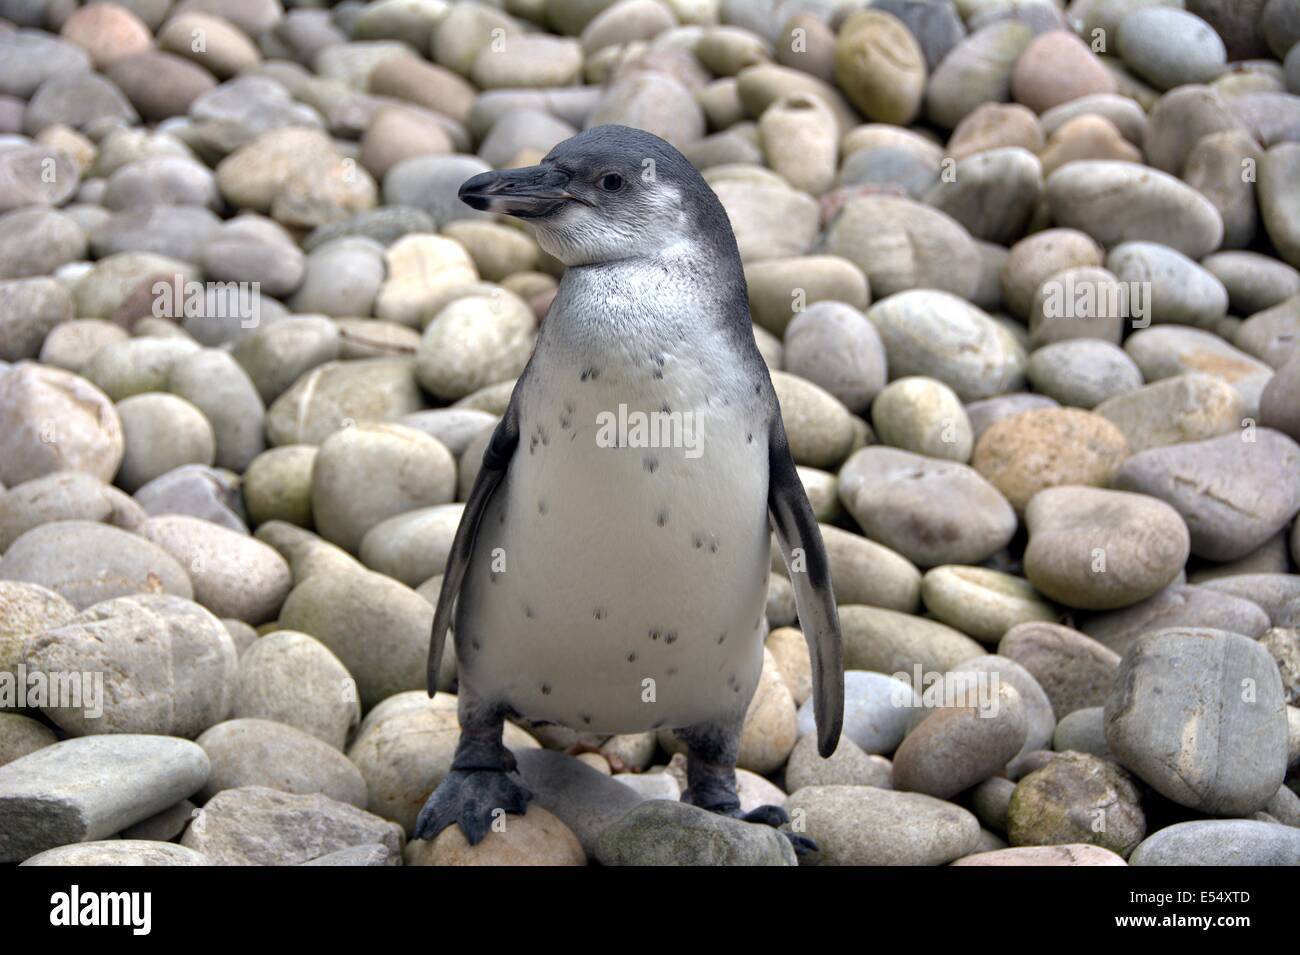 Penguin standing on stones. Stock Photo